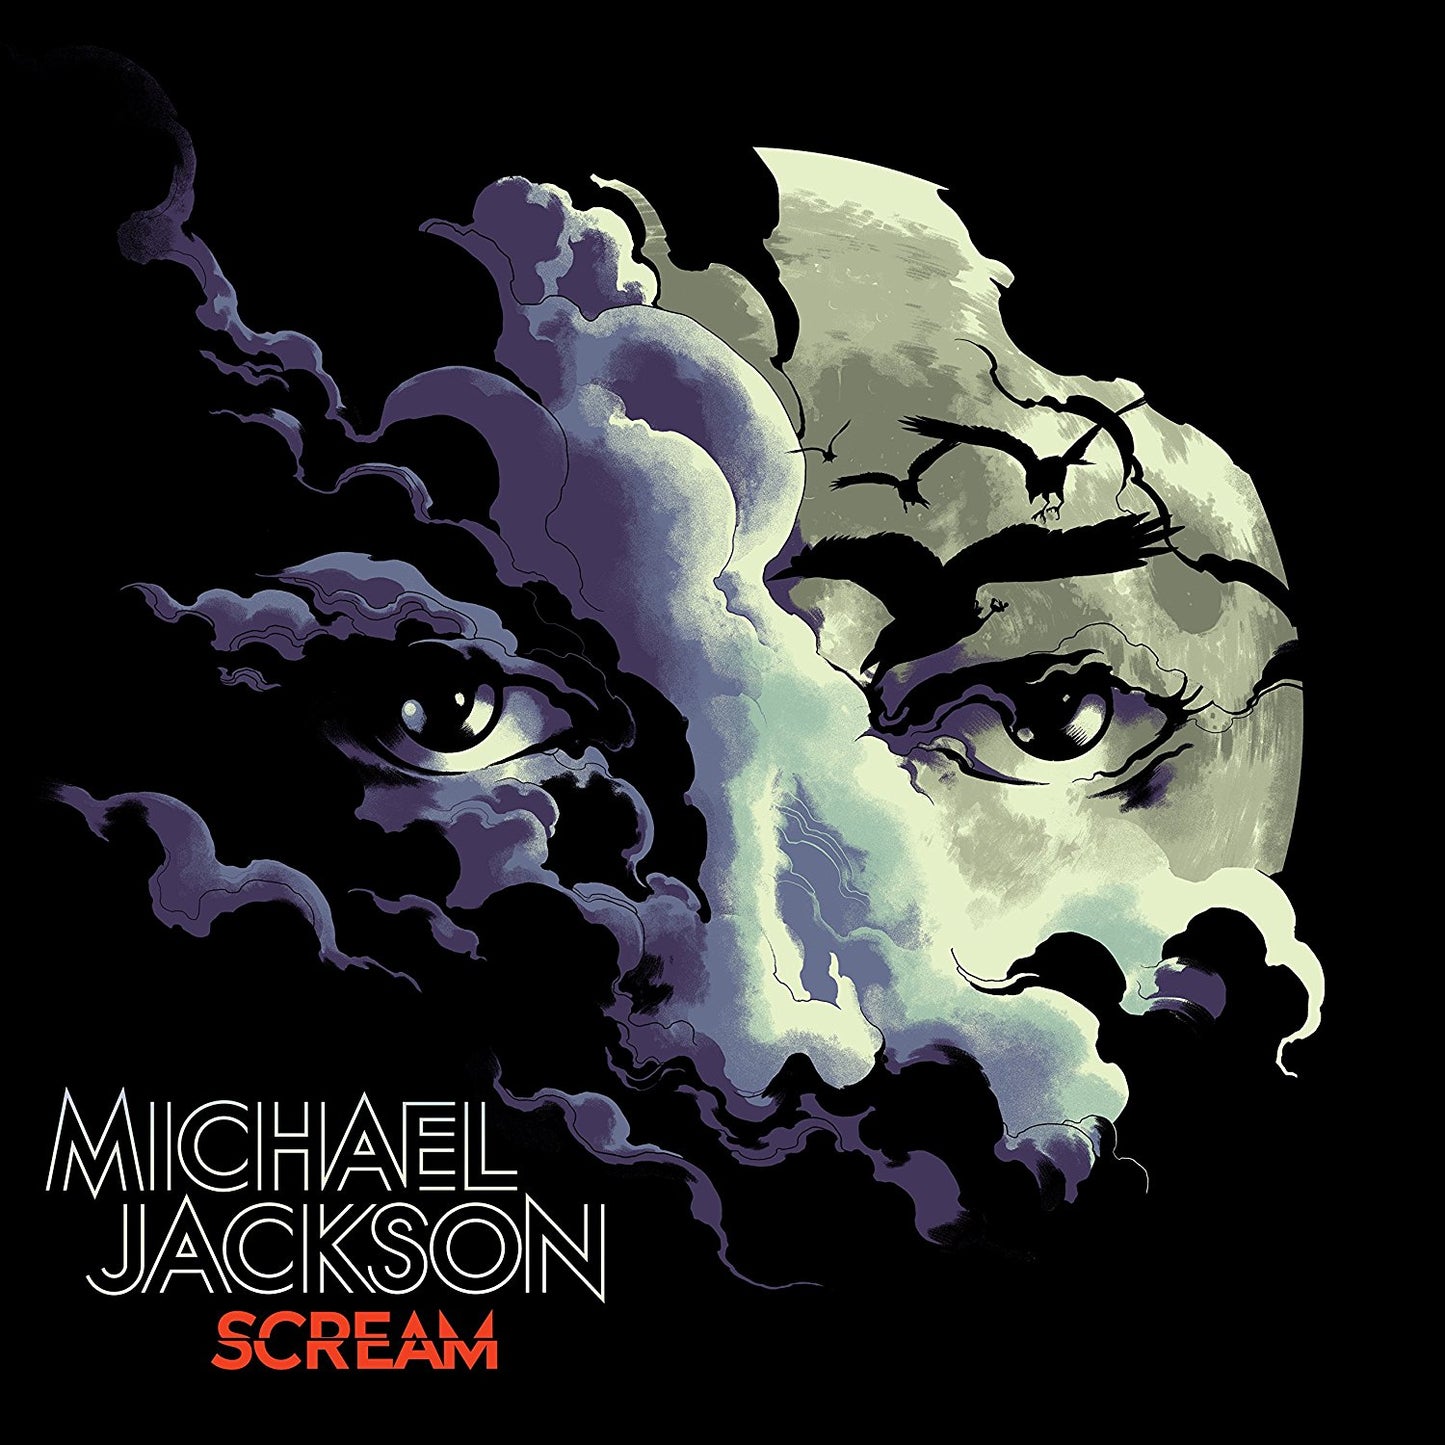 Michael Jackson / Scream 2LP coloured vinyl